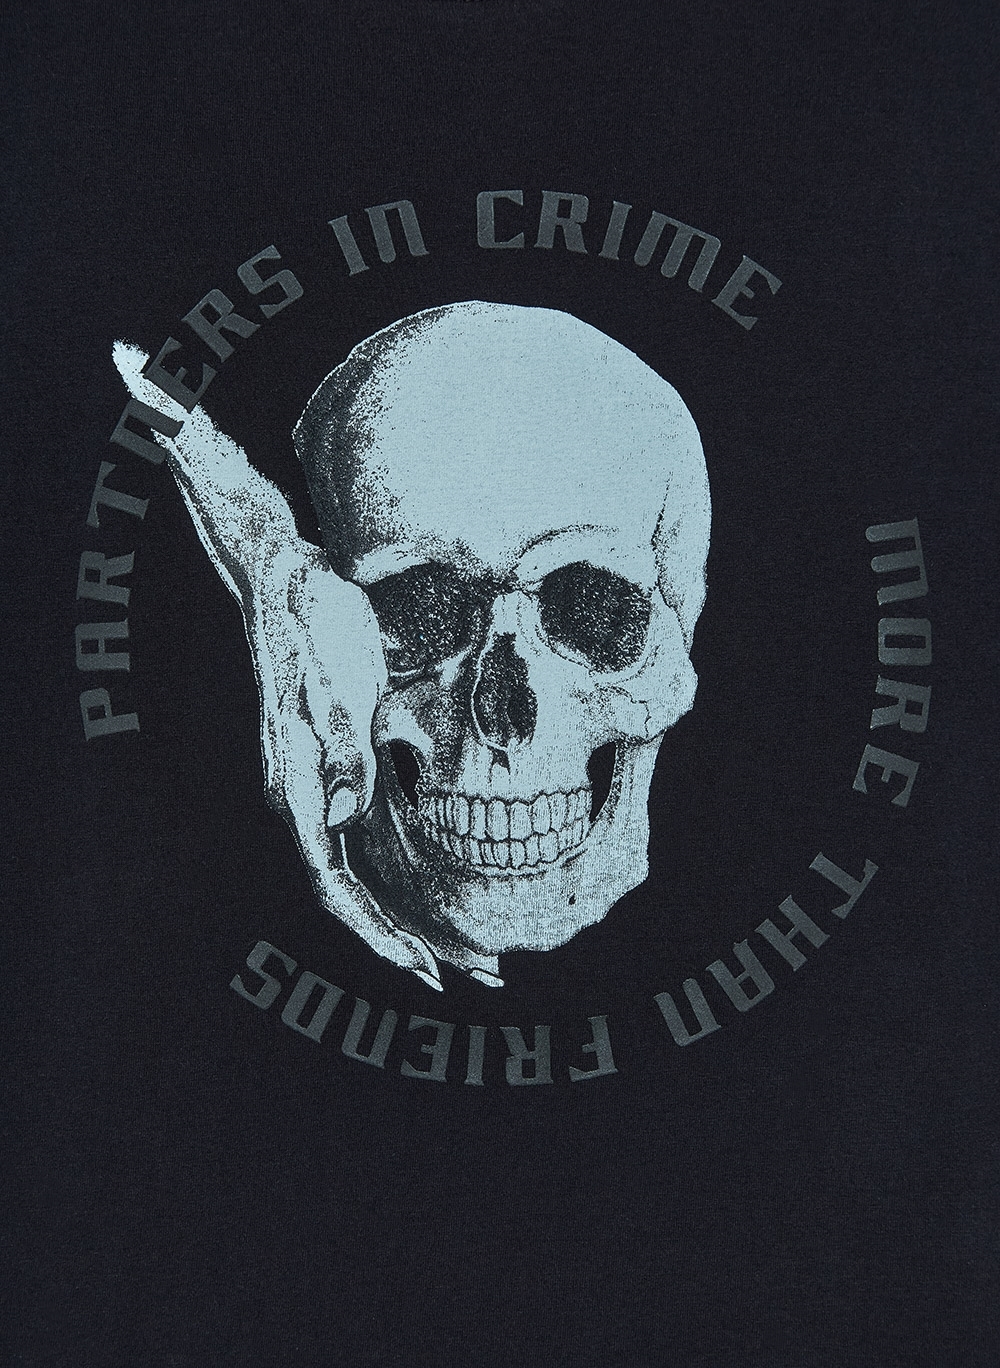 Camiseta John John Masculina Rg Partners Skull Preta 